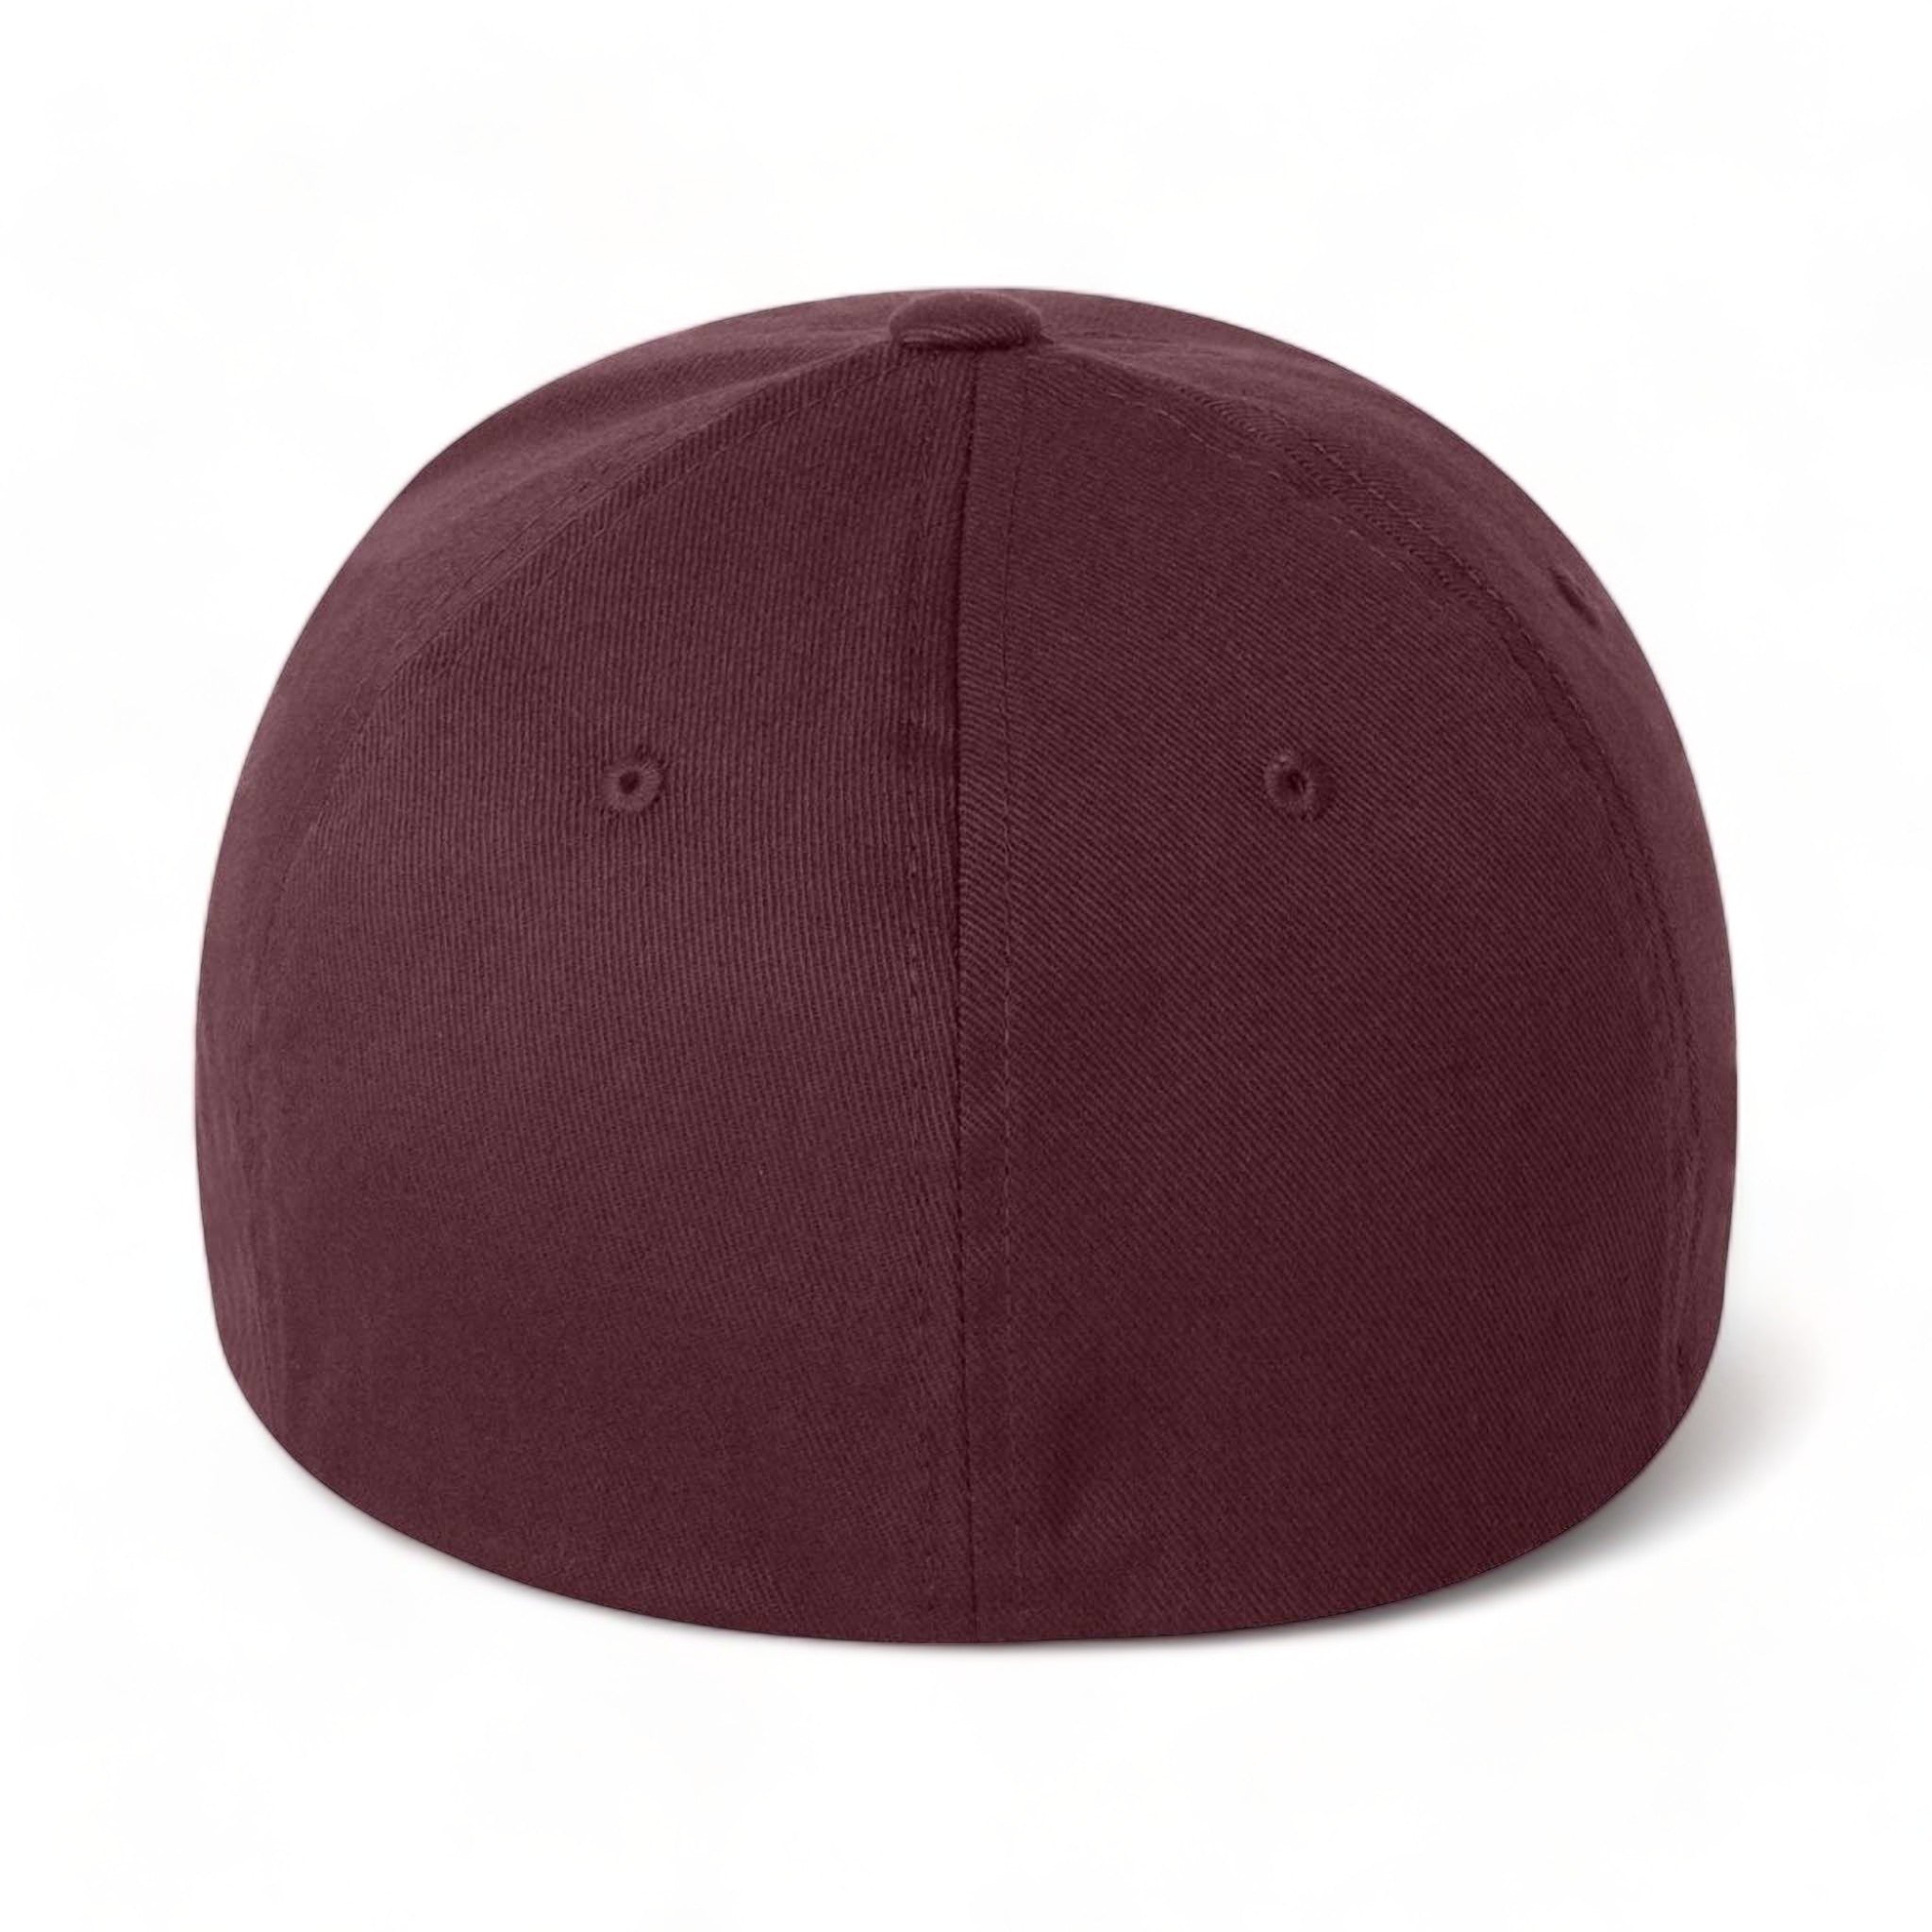 Back view of Flexfit 6277 custom hat in maroon